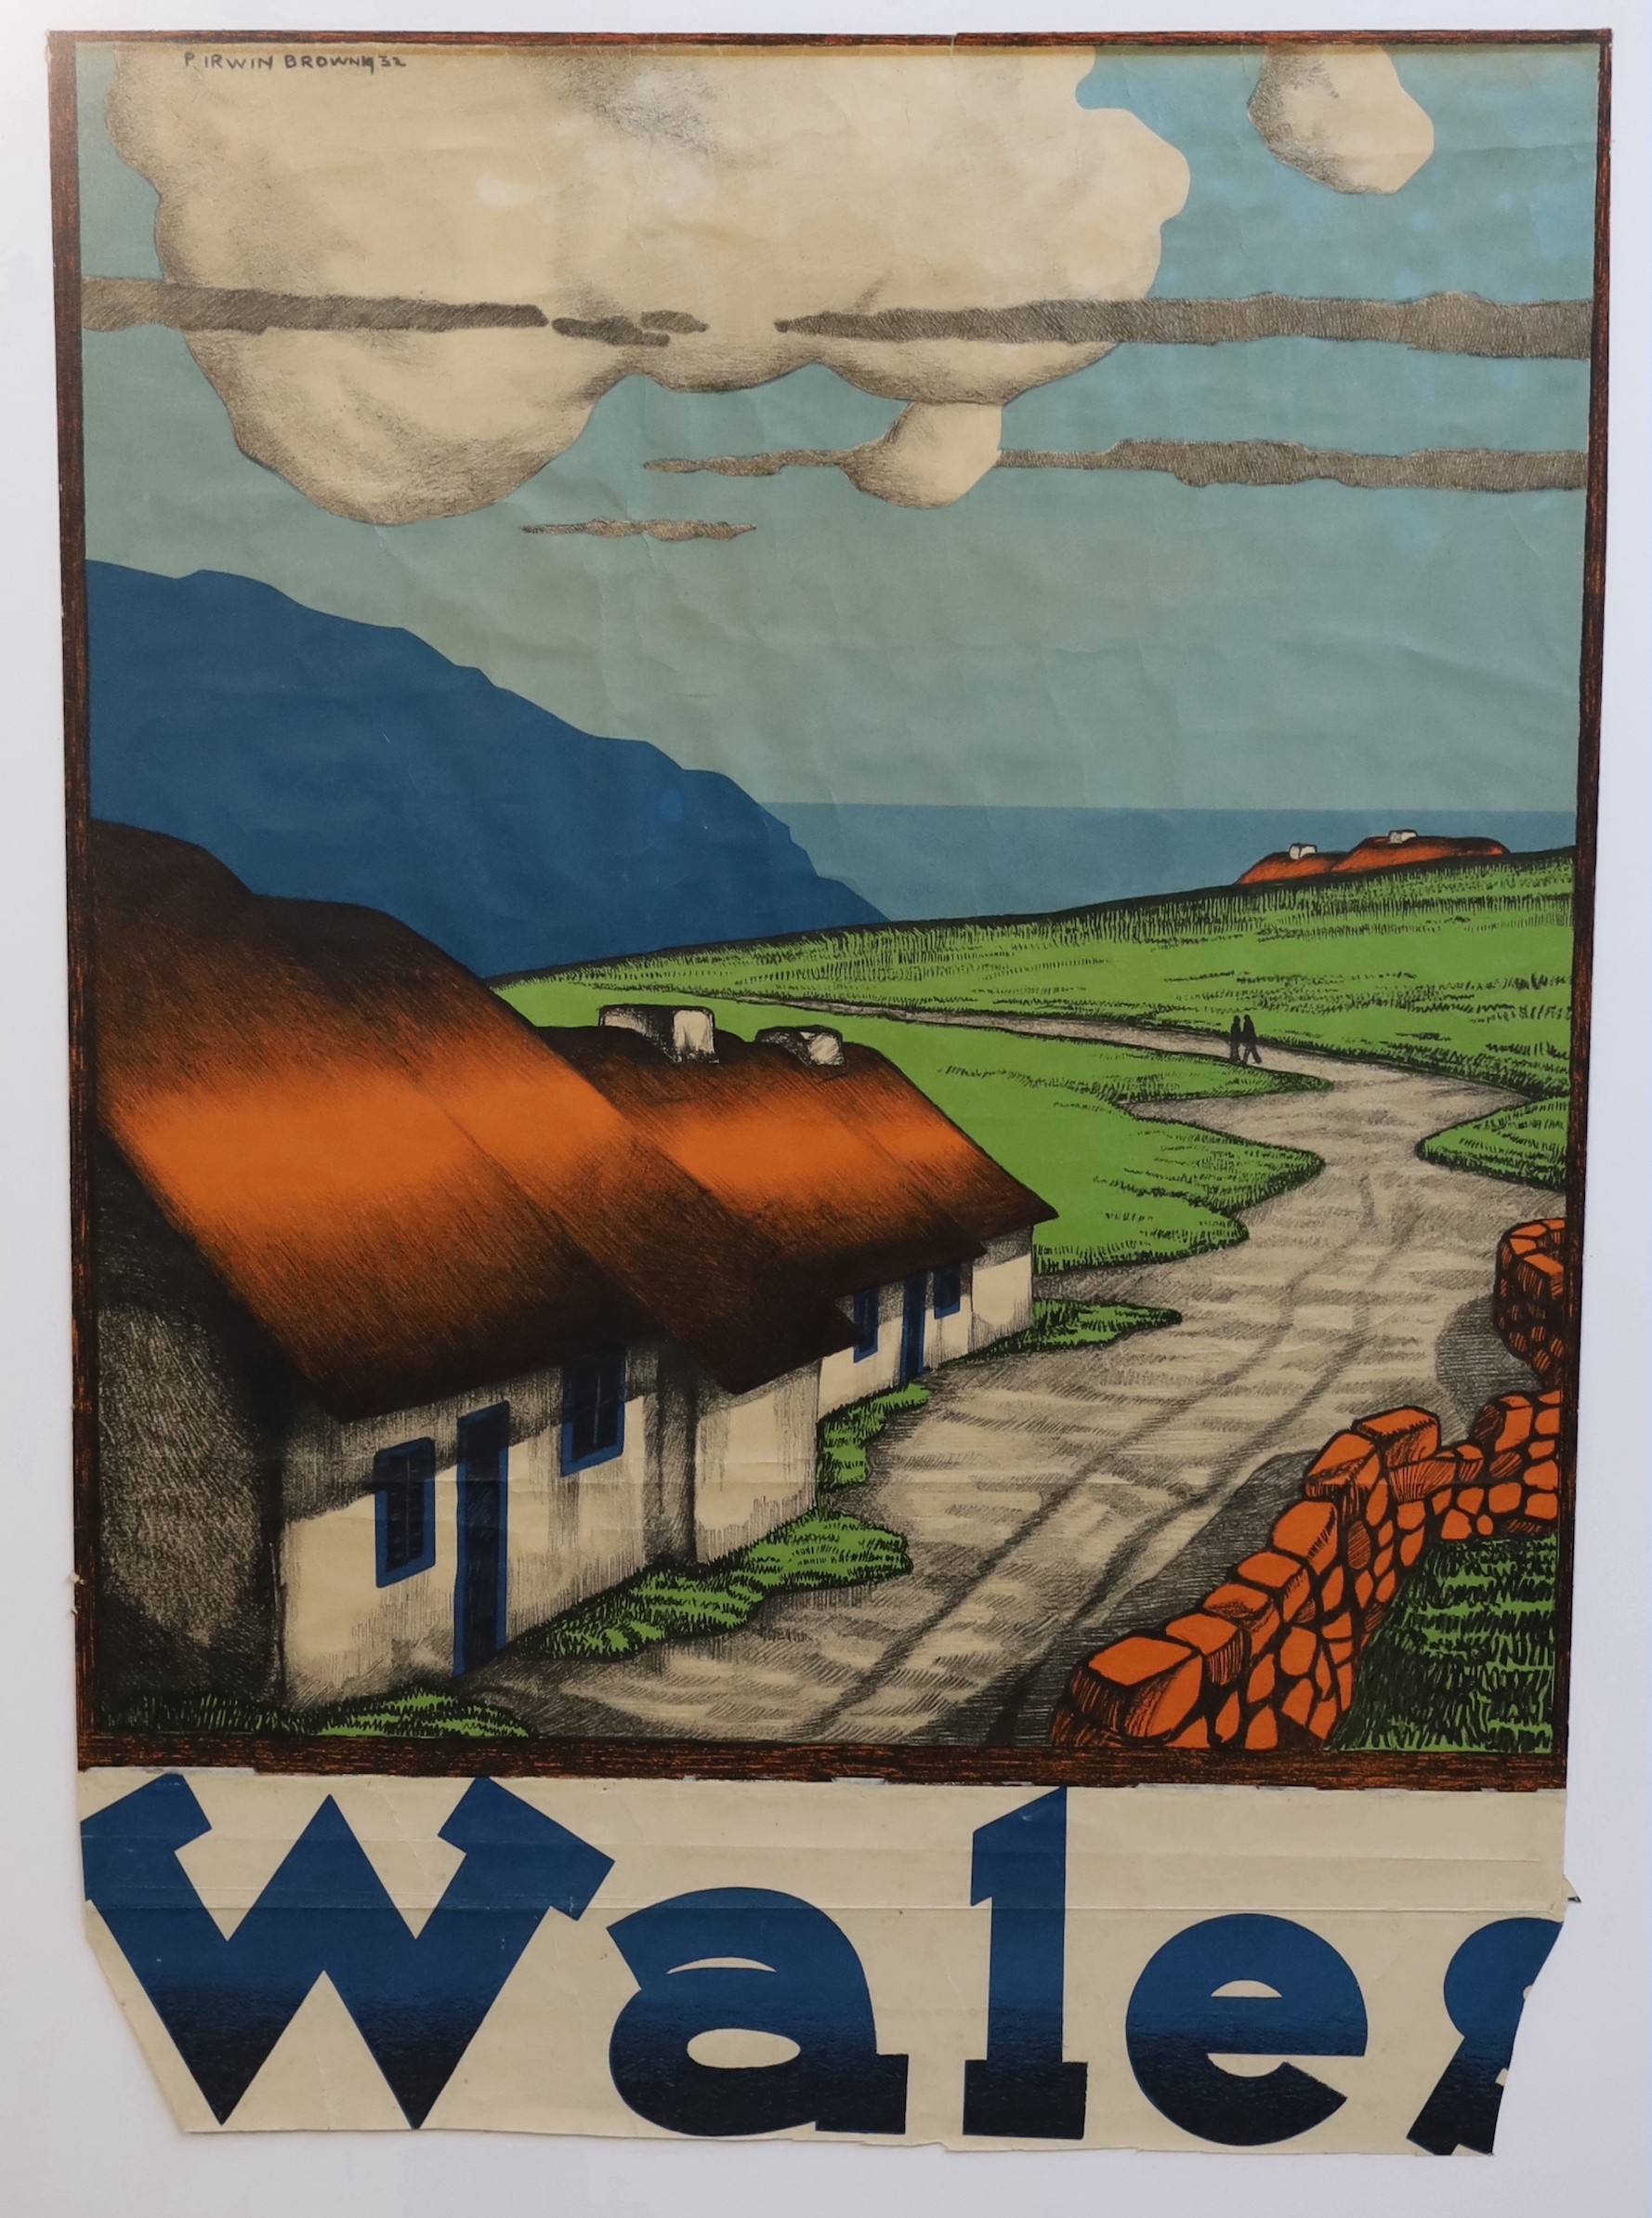 Pieter Irwin Brown (Dutch/Irish, 1903-1988), 'Wales', lithograph, 63 x 45cm                                                                                                                                                 